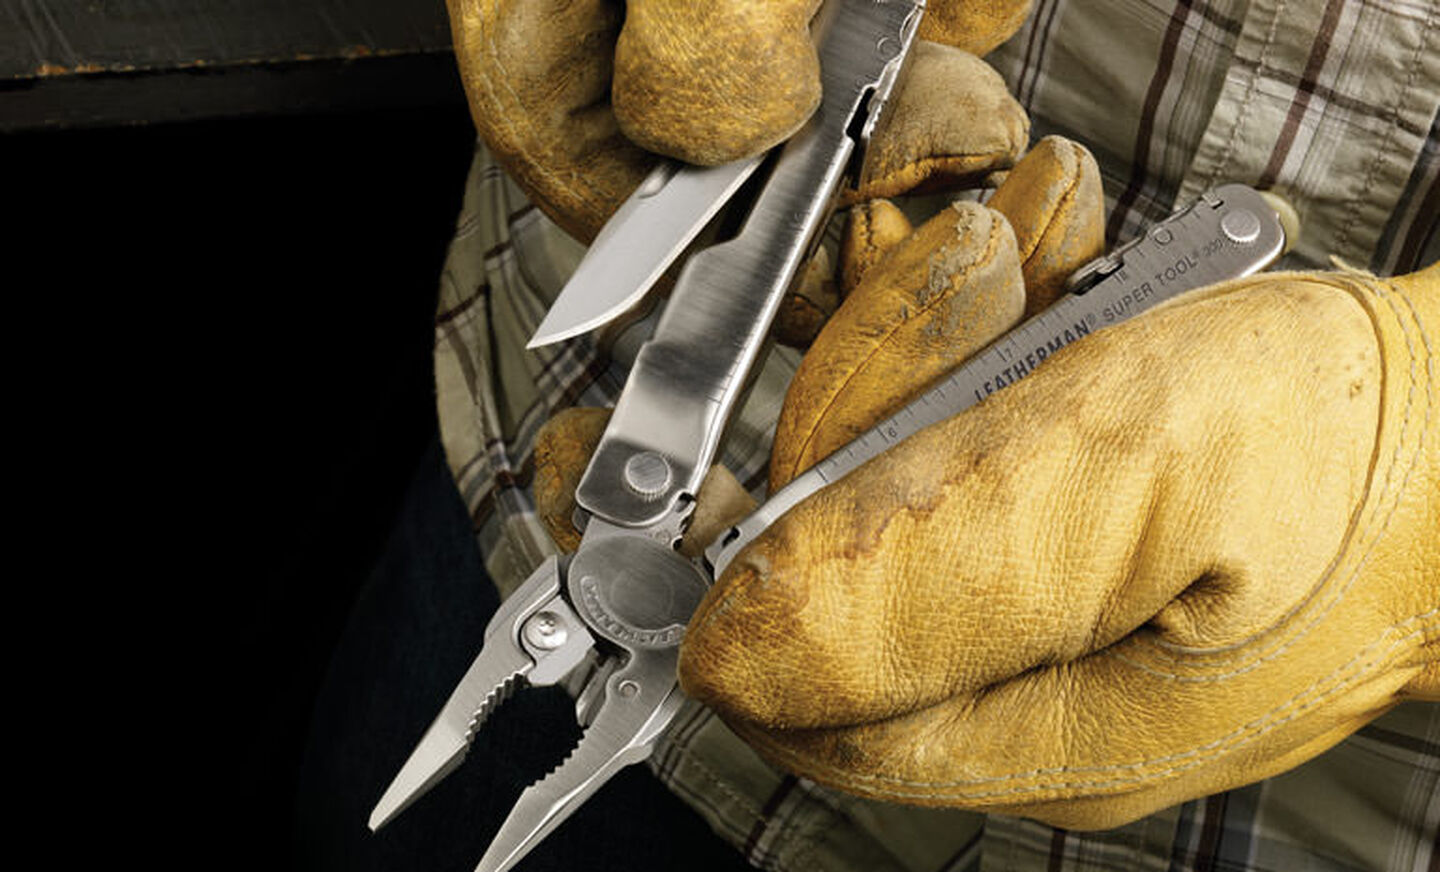 Leatherman stainless steel heritage super tool 300 multi-tool in hand